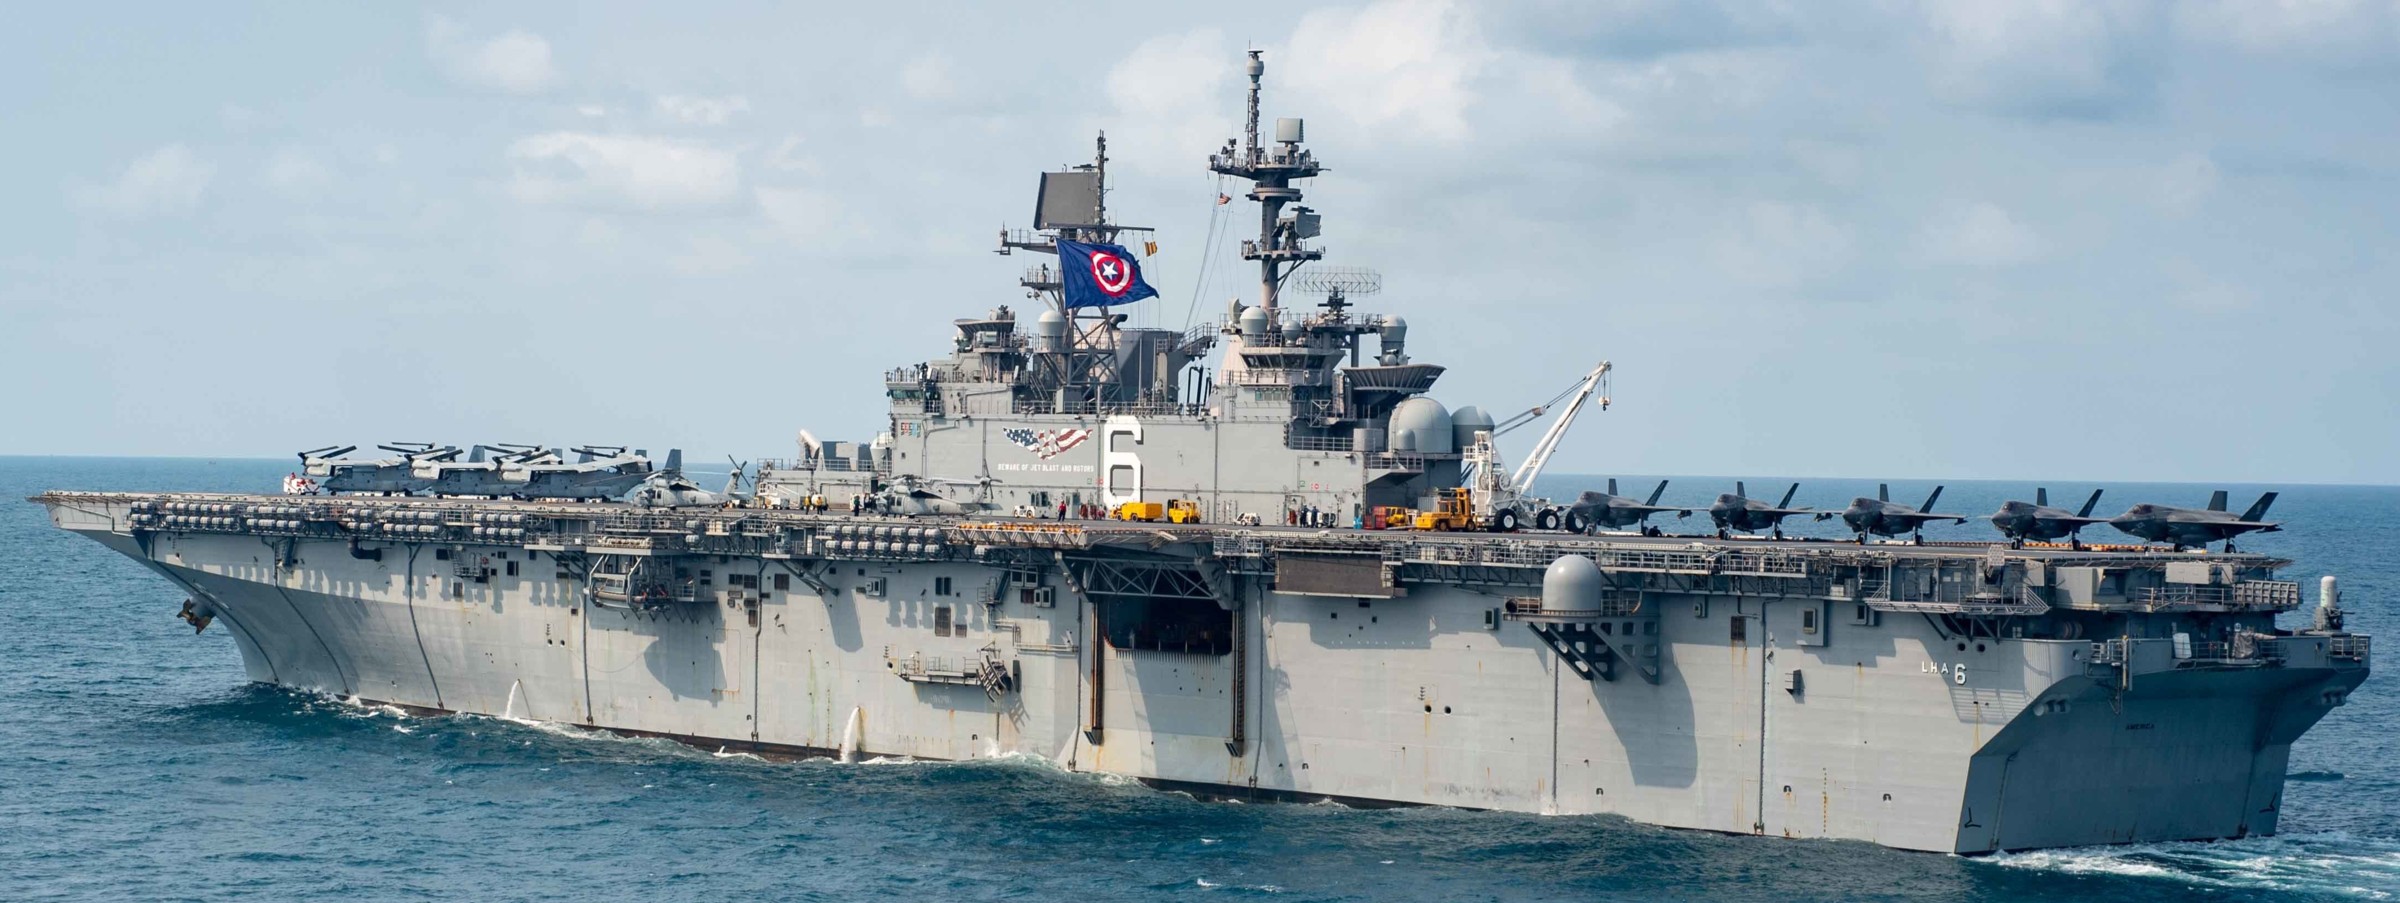 lha-6 uss america amphibious assault ship landing us navy marines vmm-265 162